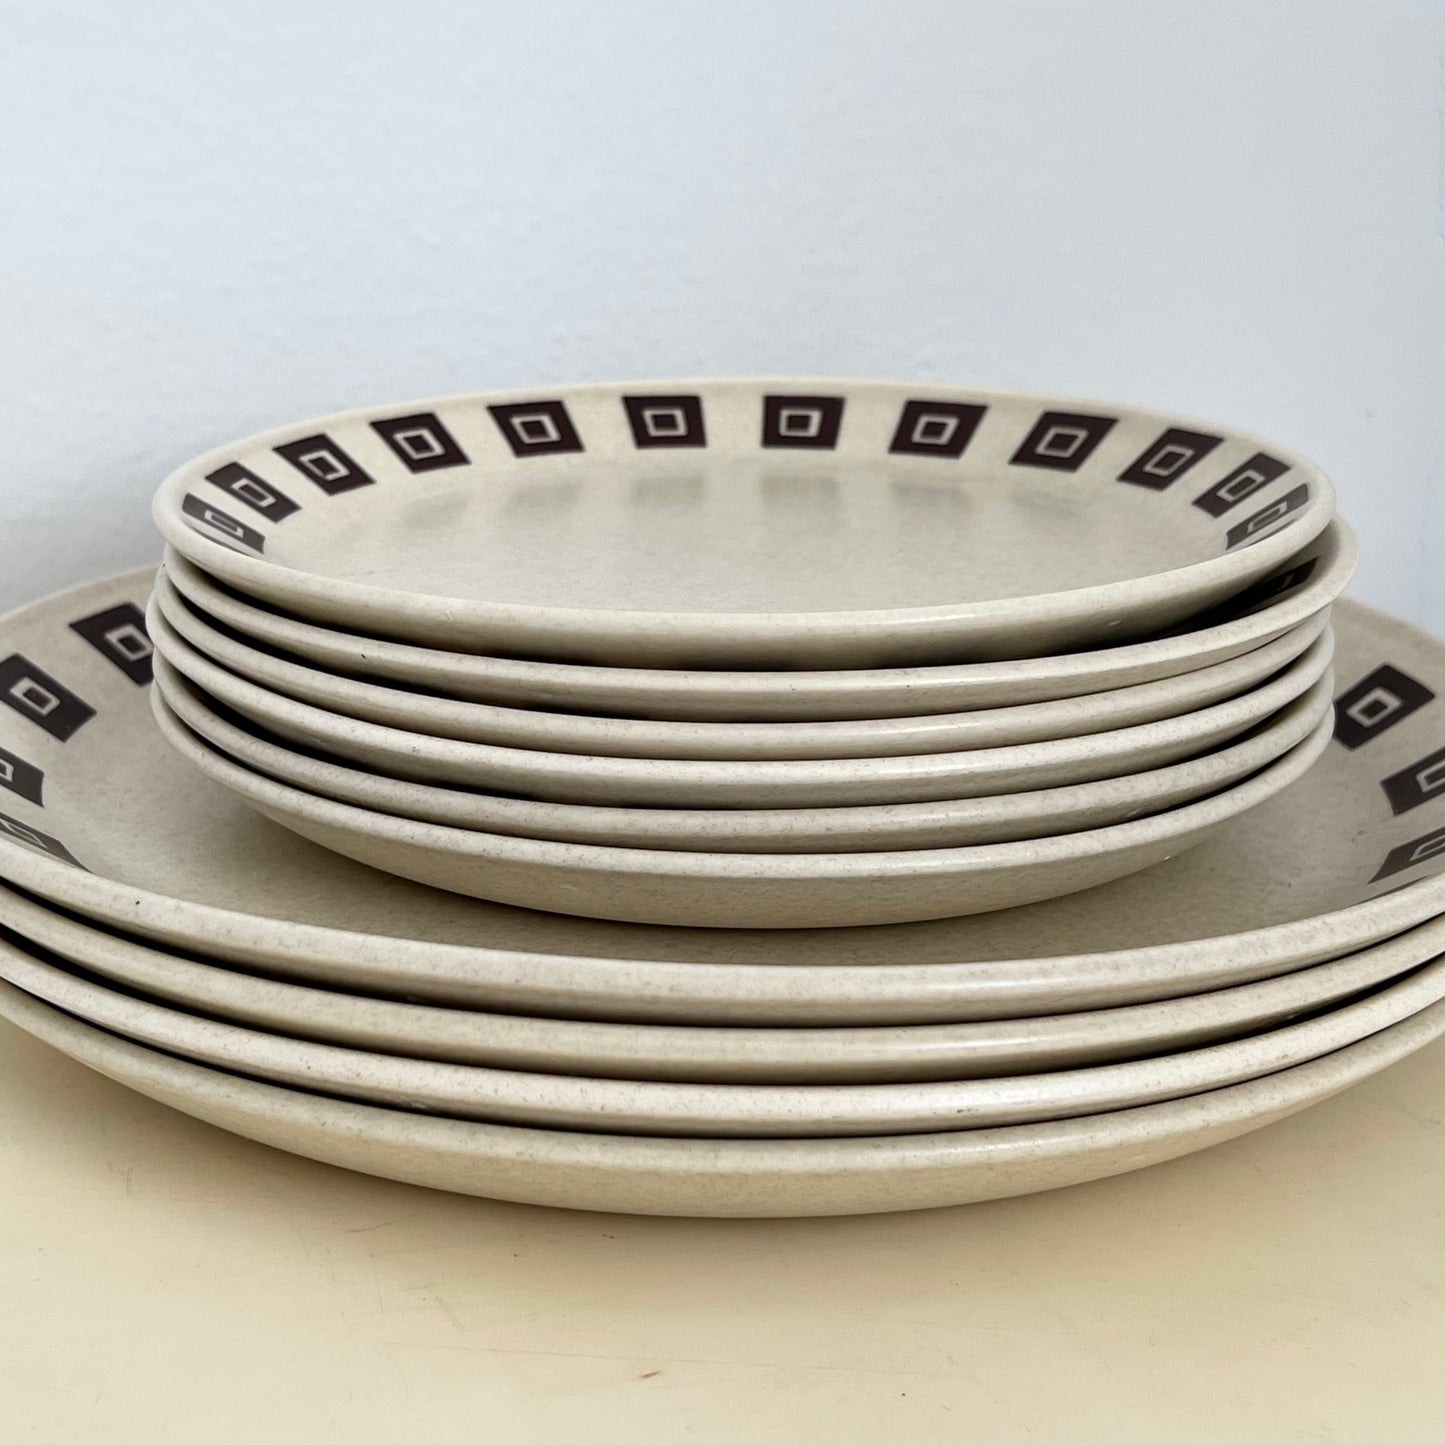 Set of Dinner Plates